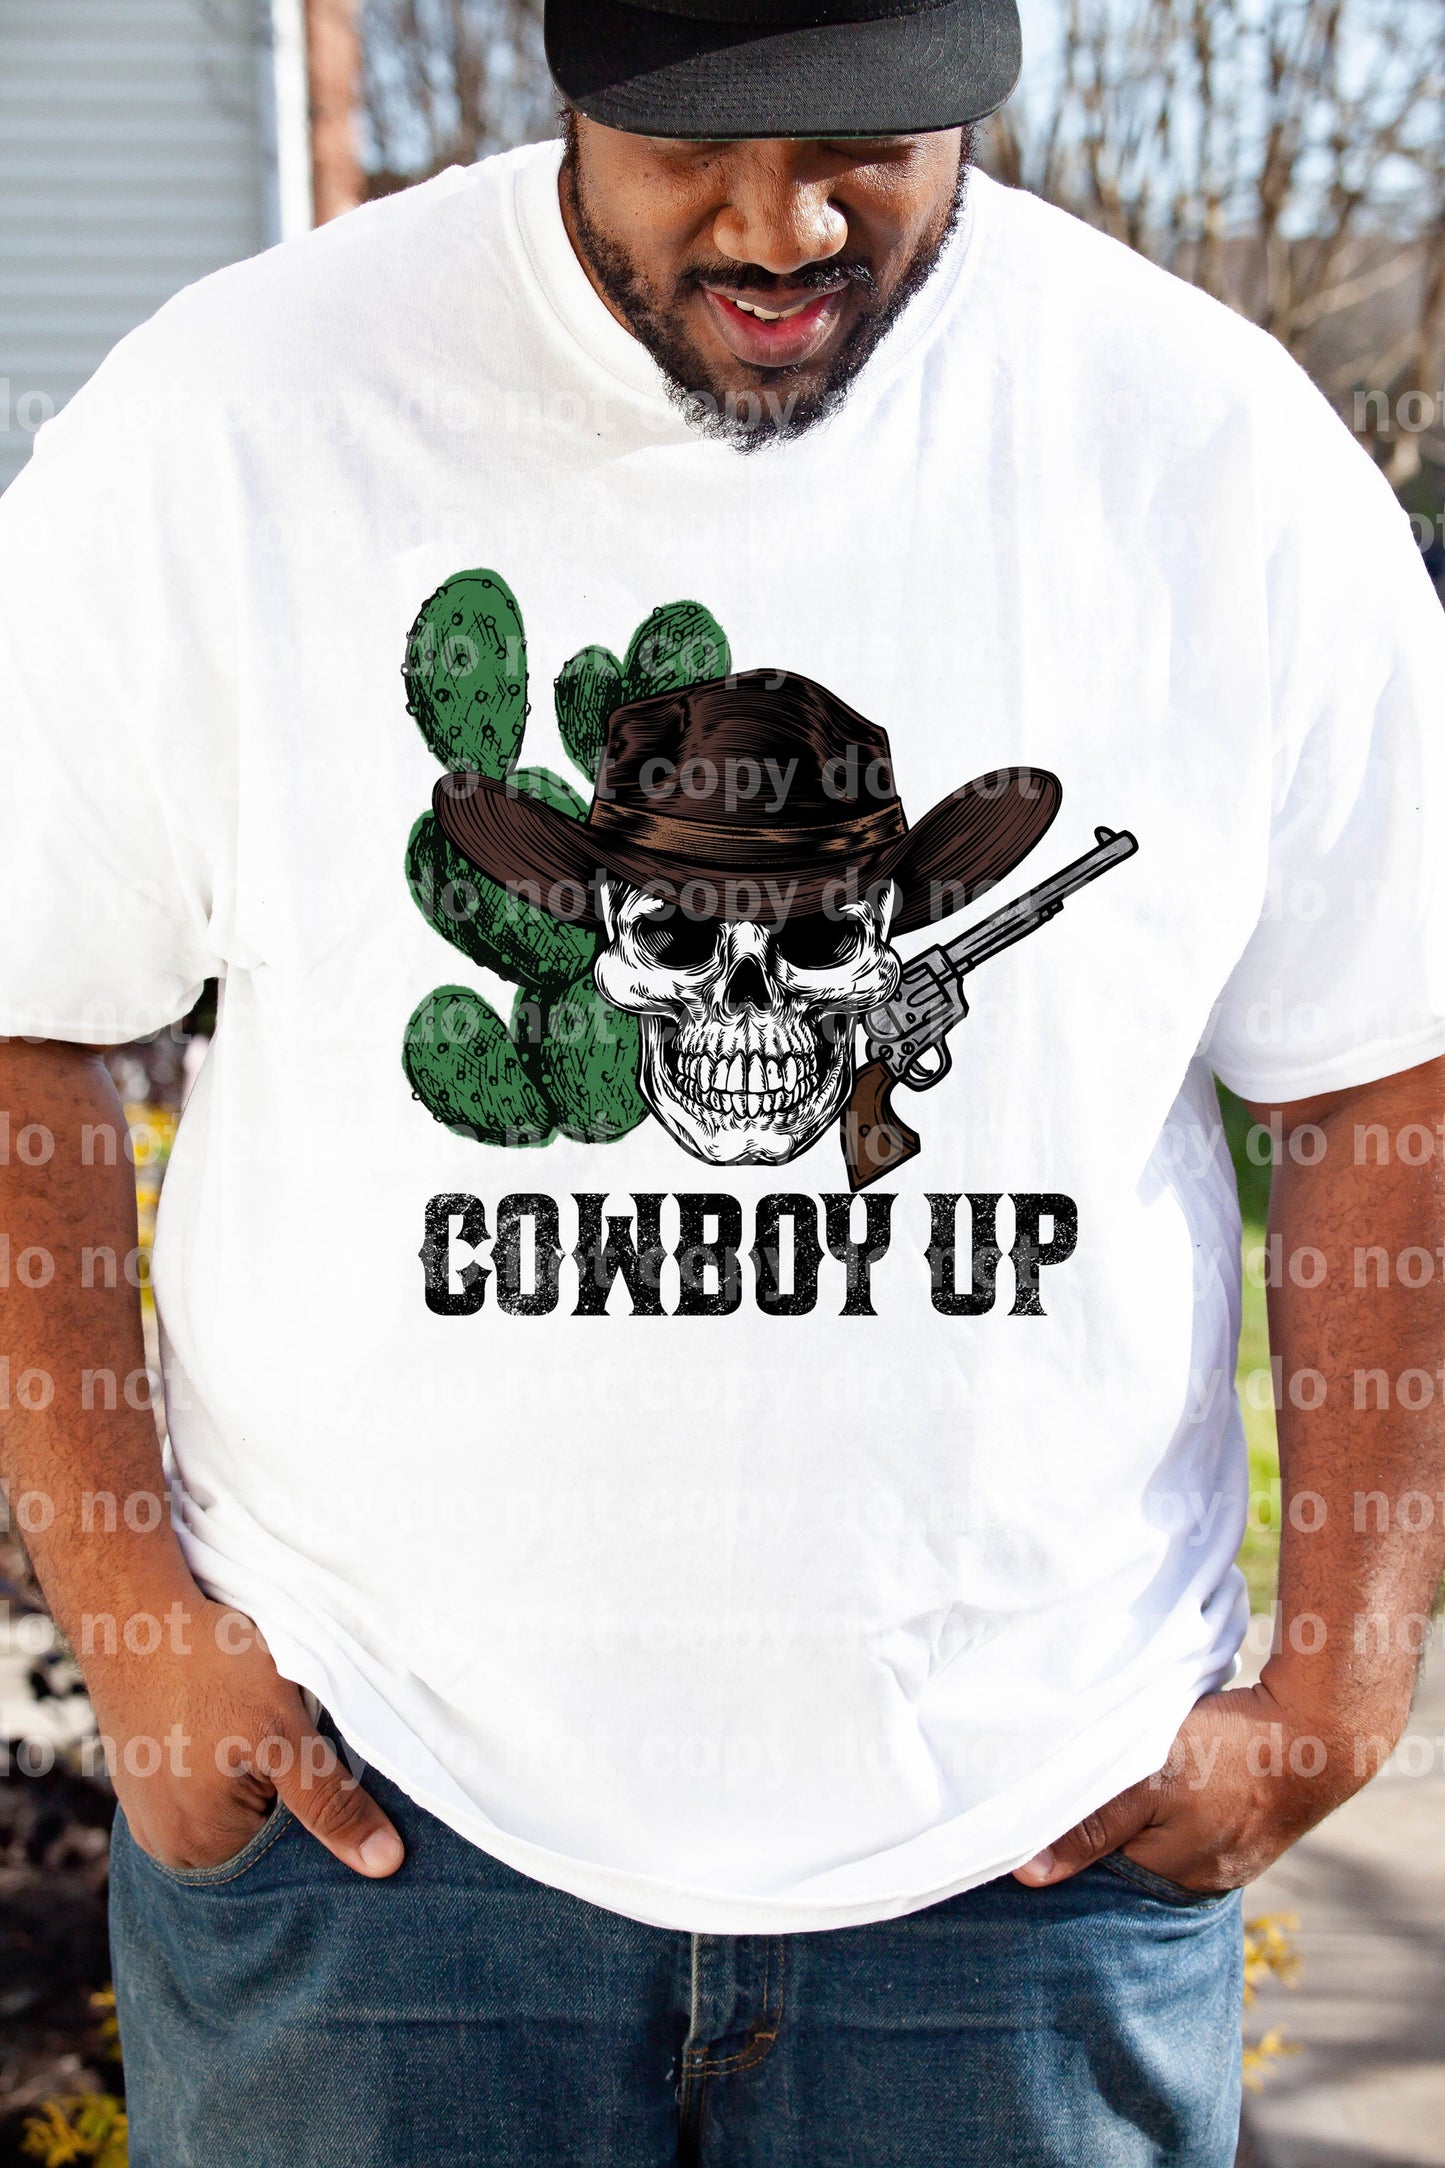 Cowboy Up Dream Print or Sublimation Print